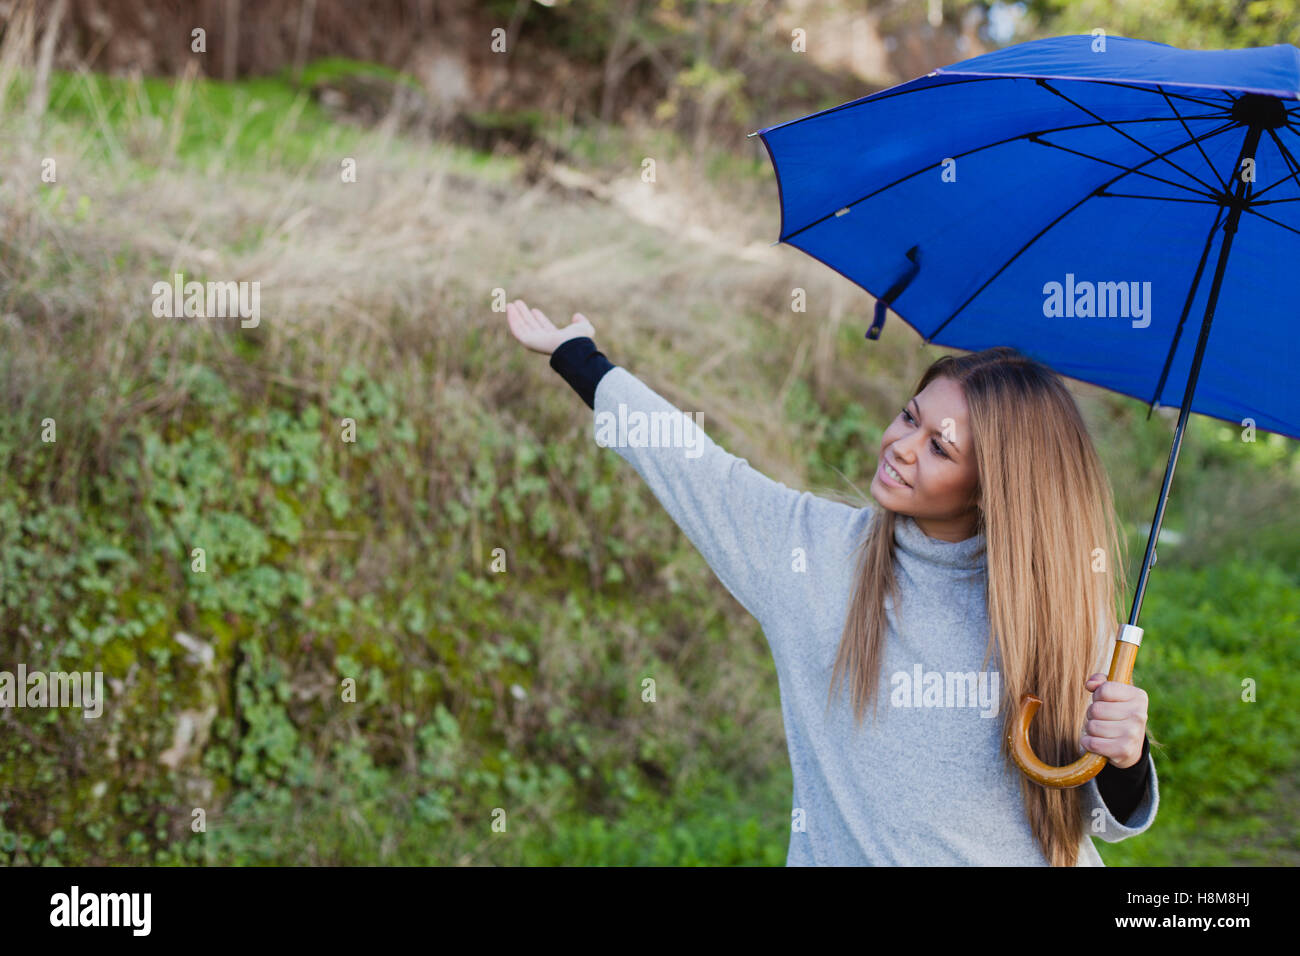 Зонтик бандита. Девушка с зонтиком. Девушка с зонтиком синим. Девушка с синим зонтом. Фотосессия с синим зонтом.